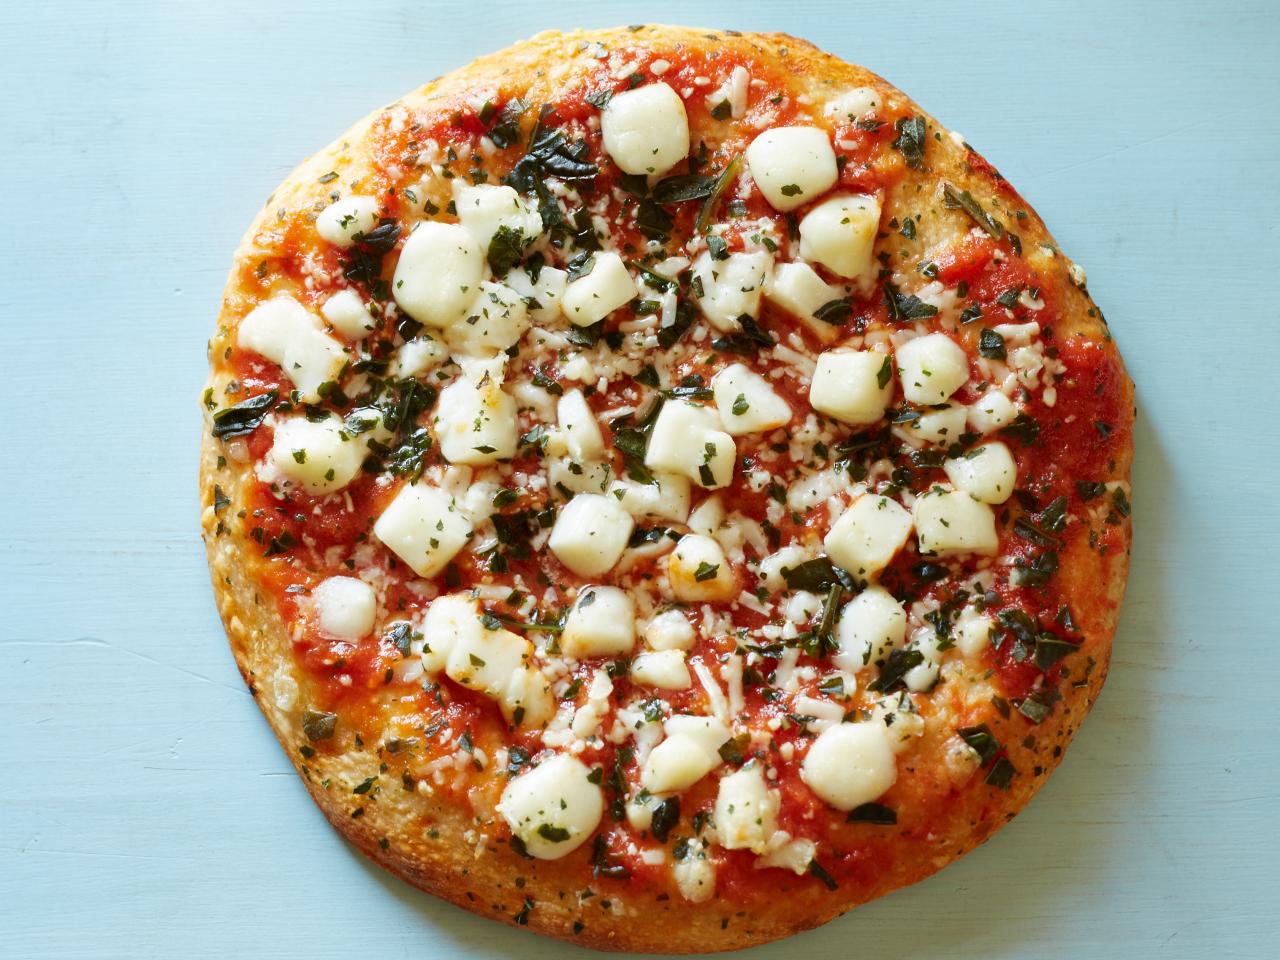 https://food.fnr.sndimg.com/content/dam/images/food/fullset/2014/2/17/0/HE_frozen-pizza-taste-test.jpg.rend.hgtvcom.1280.960.suffix/1392675141498.jpeg